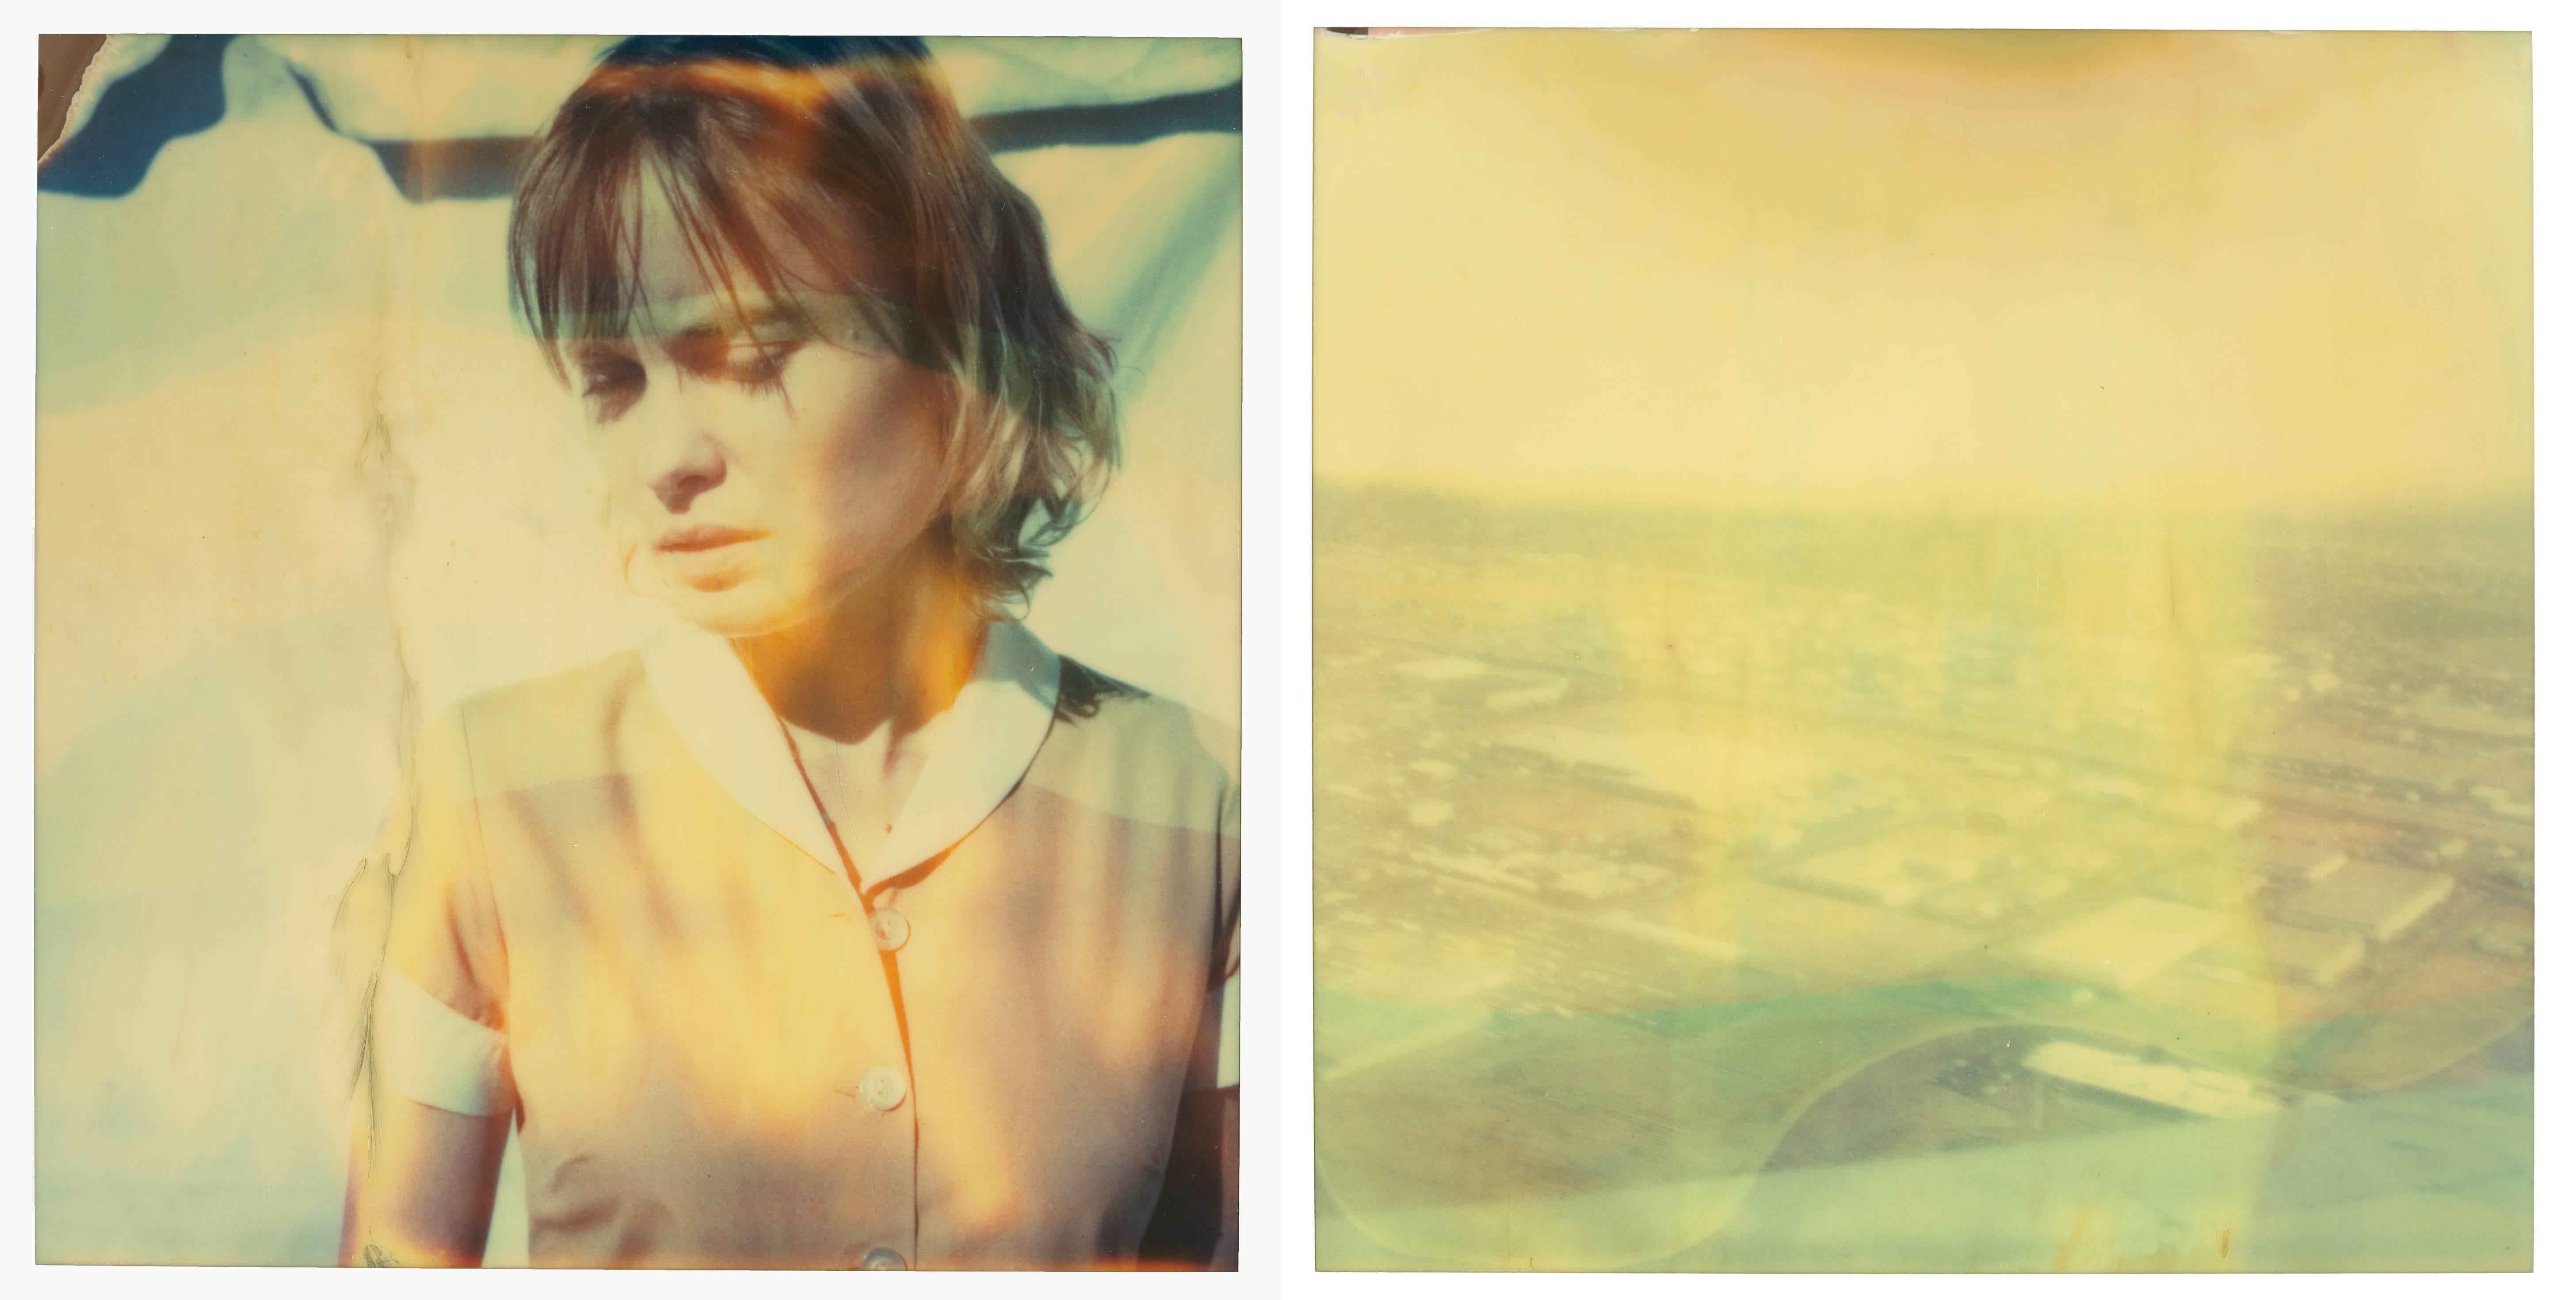 Stefanie Schneider Portrait Photograph - The Farmer's Wife's Dream - diptych, analog, based on two Polaroids